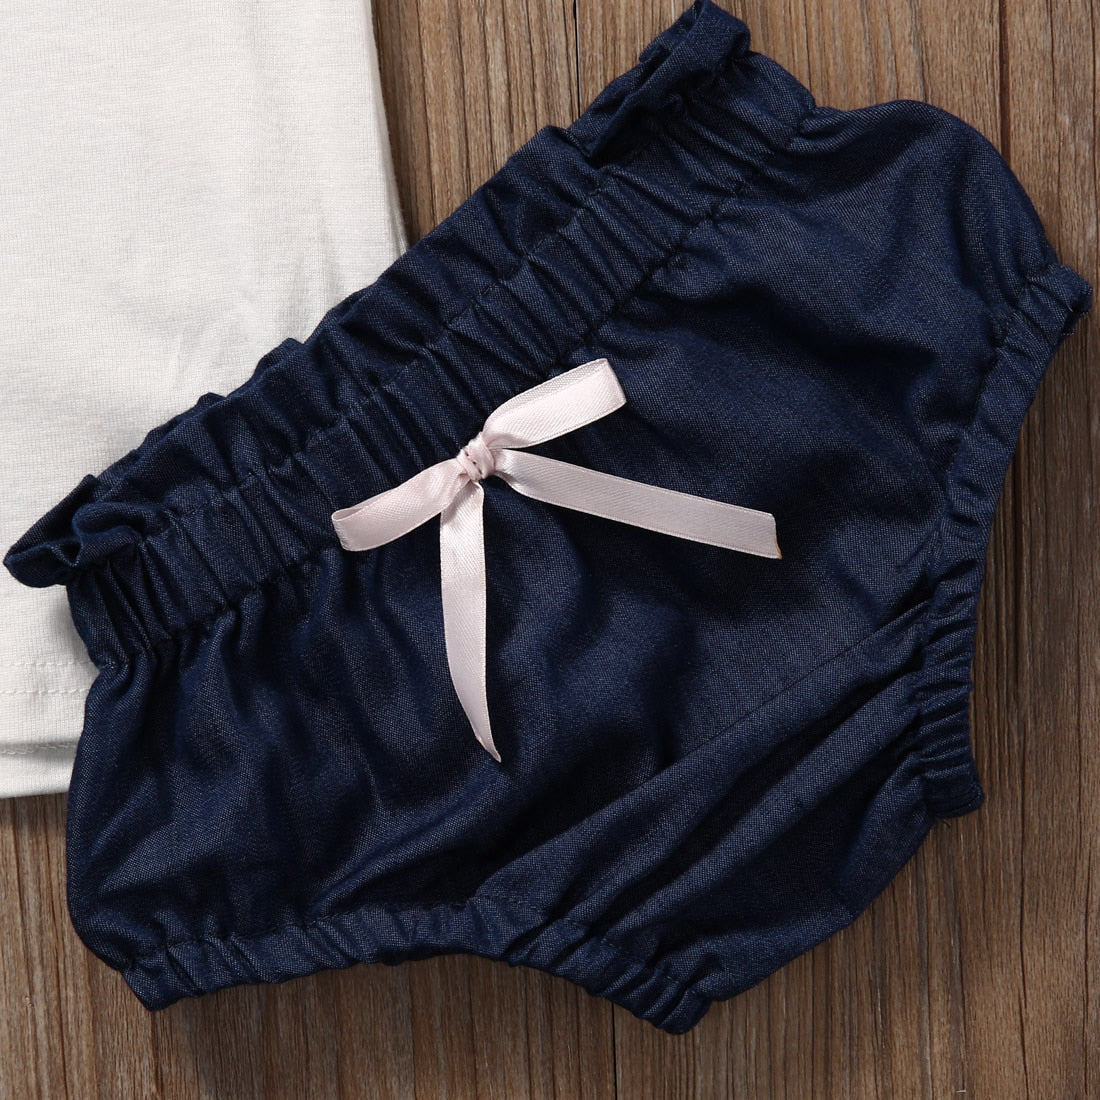 Cute Toddler Kids Baby Girl Outfits T-shirt Tank Tops + Denim Shorts Pants Clothes Set 2PCS - ebowsos